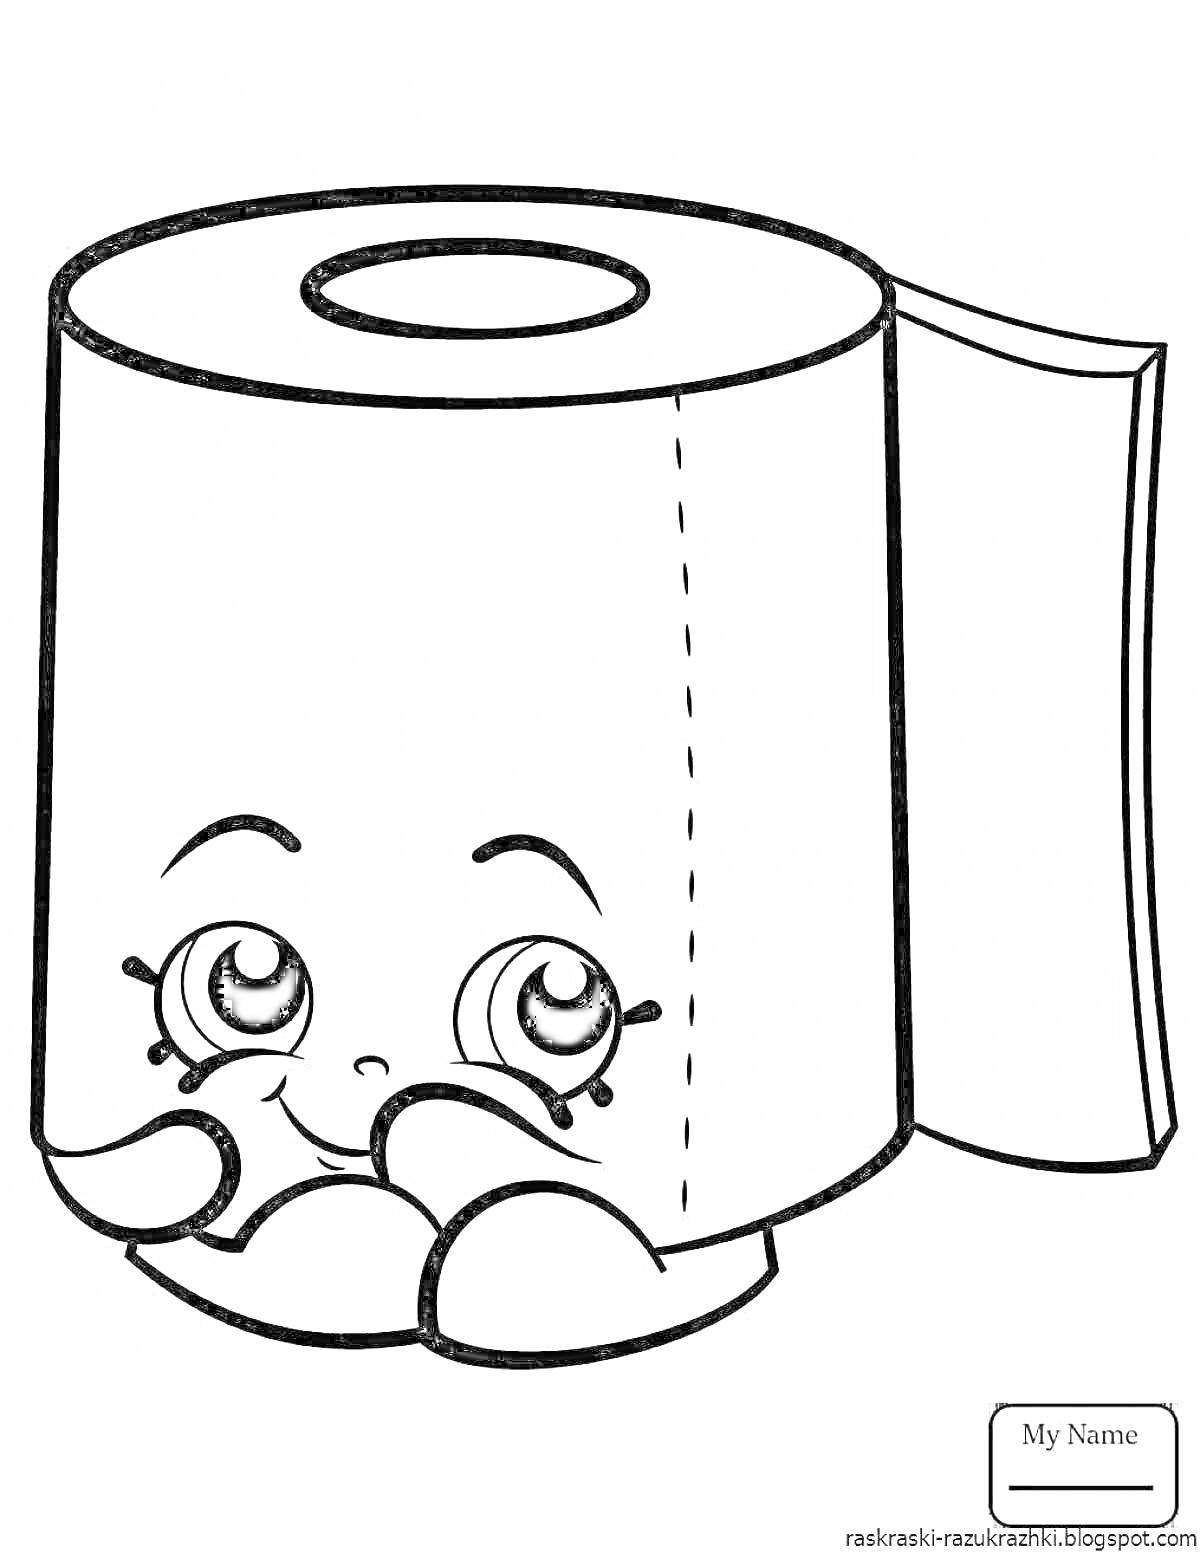 На раскраске изображено: Бумага, Туалетная бумага, Рулон, Глаза, Руки, Улыбка, Для детей, Милые